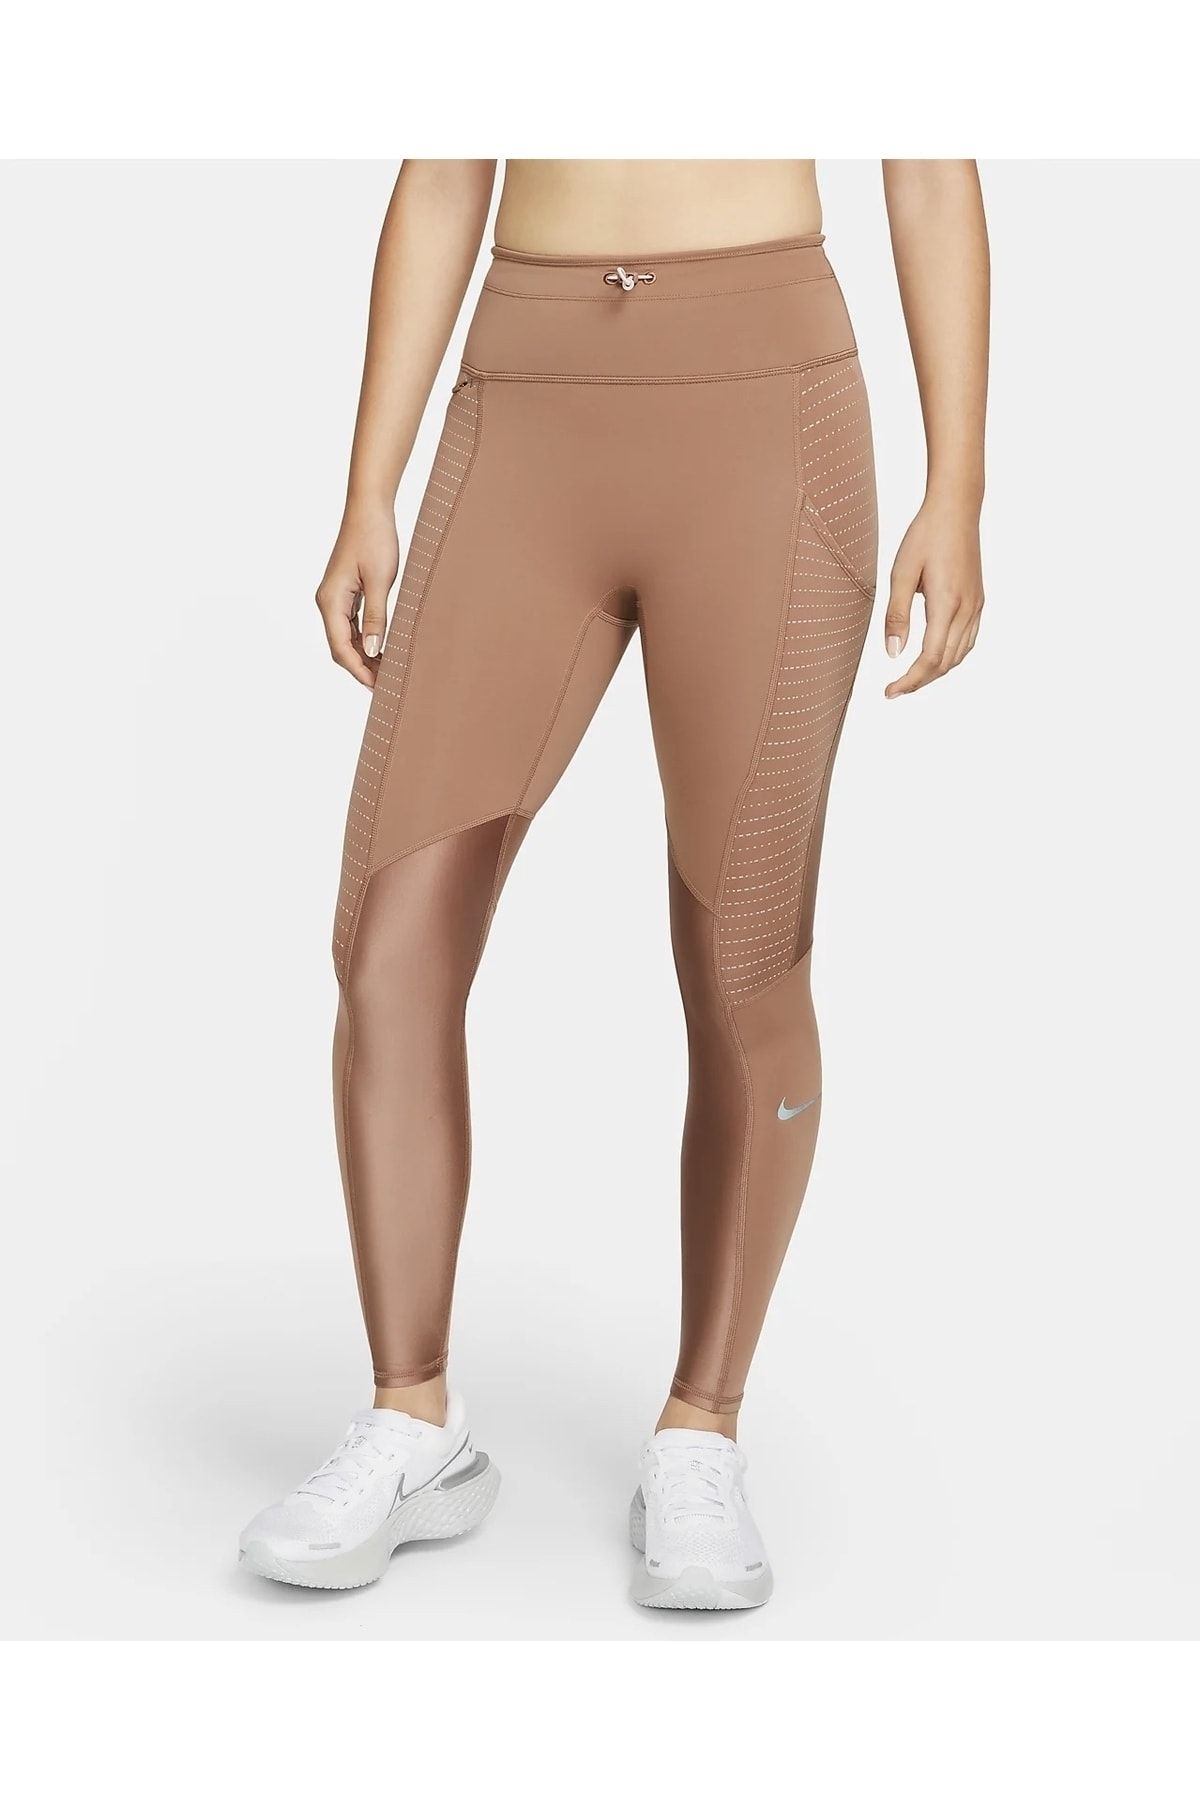 Nike Dri-FIT Run Division Epic Luxe Kadın Kahverengi Tayt